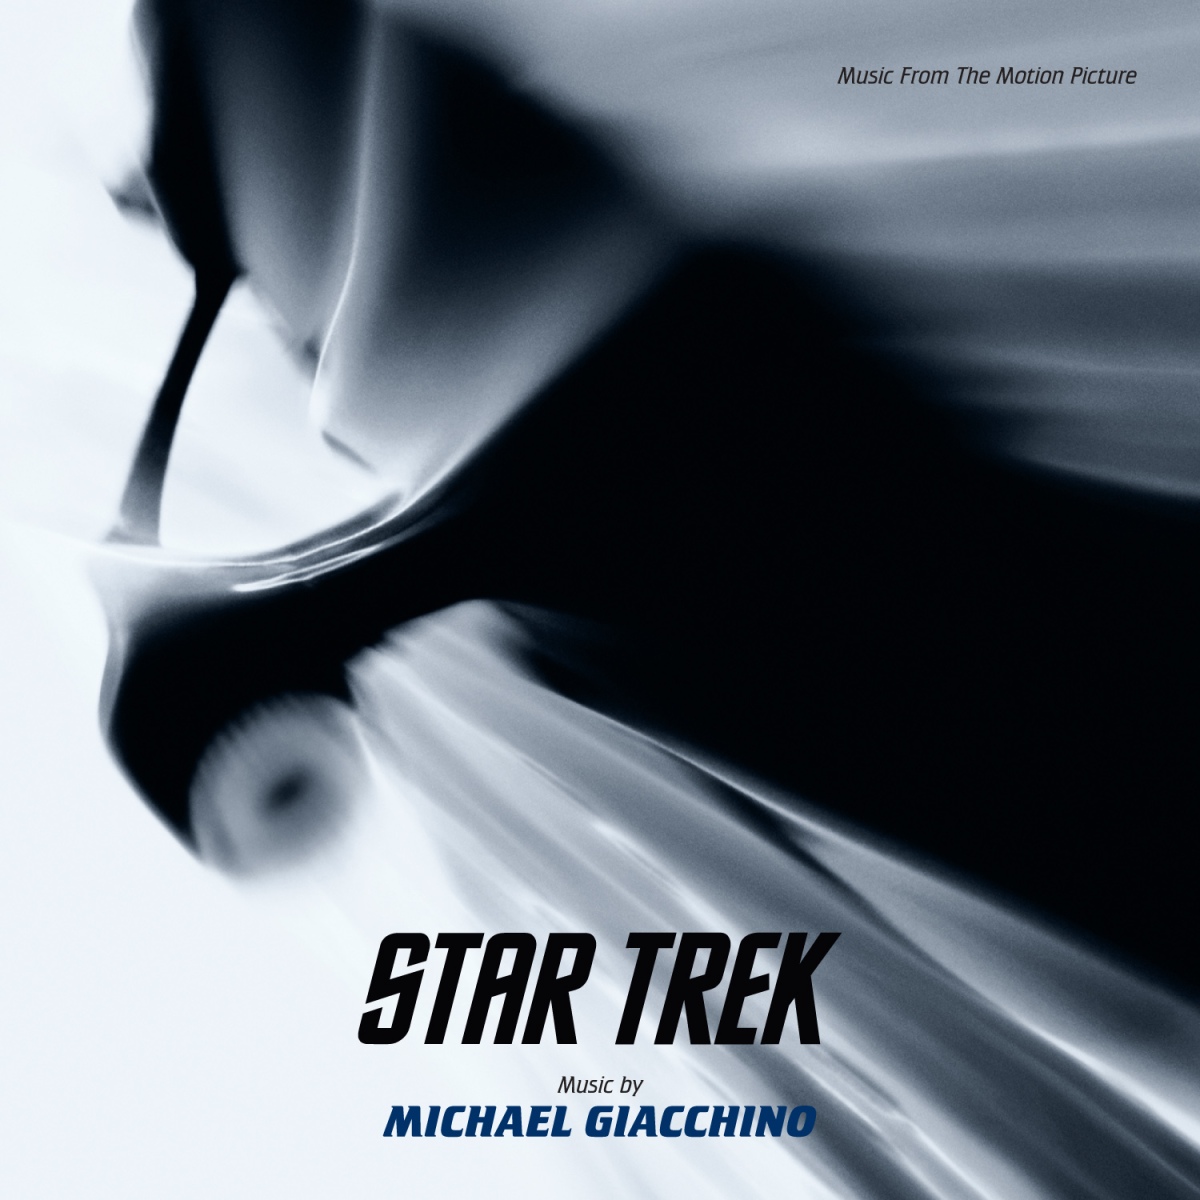 2009 star trek soundtrack